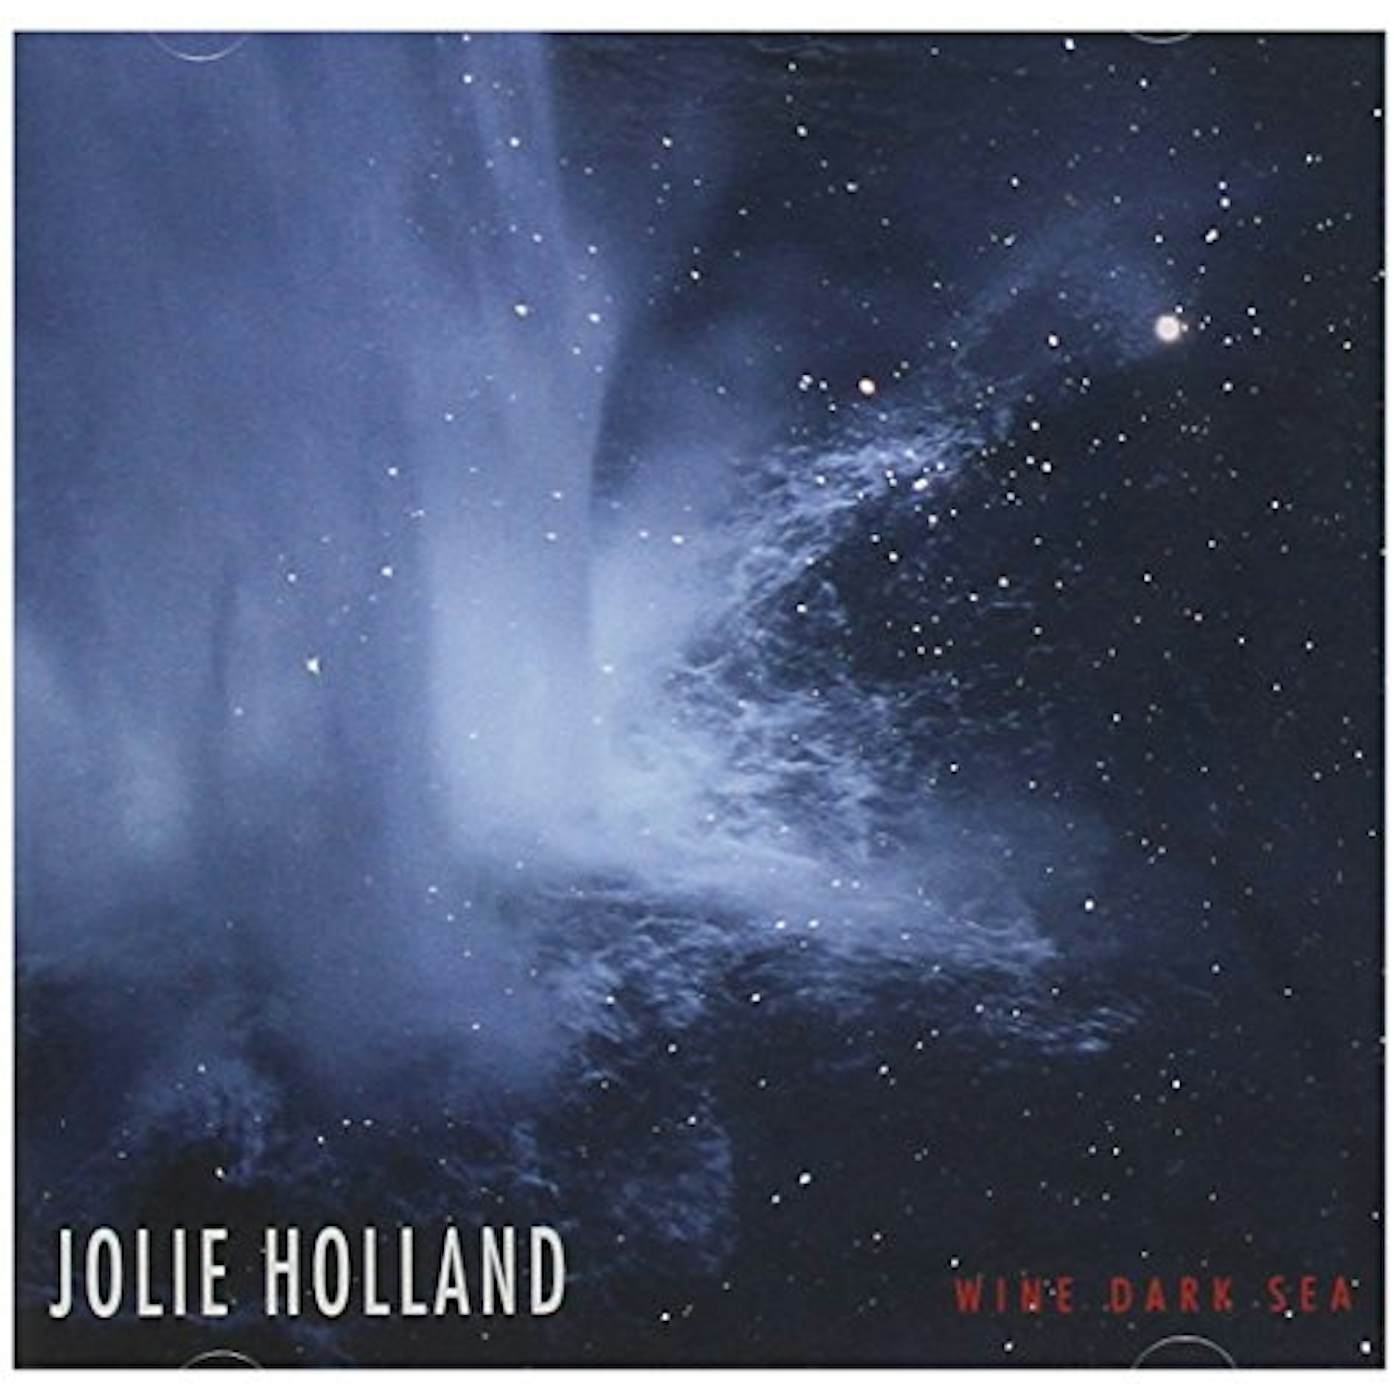 Jolie Holland WINE DARK SEA CD